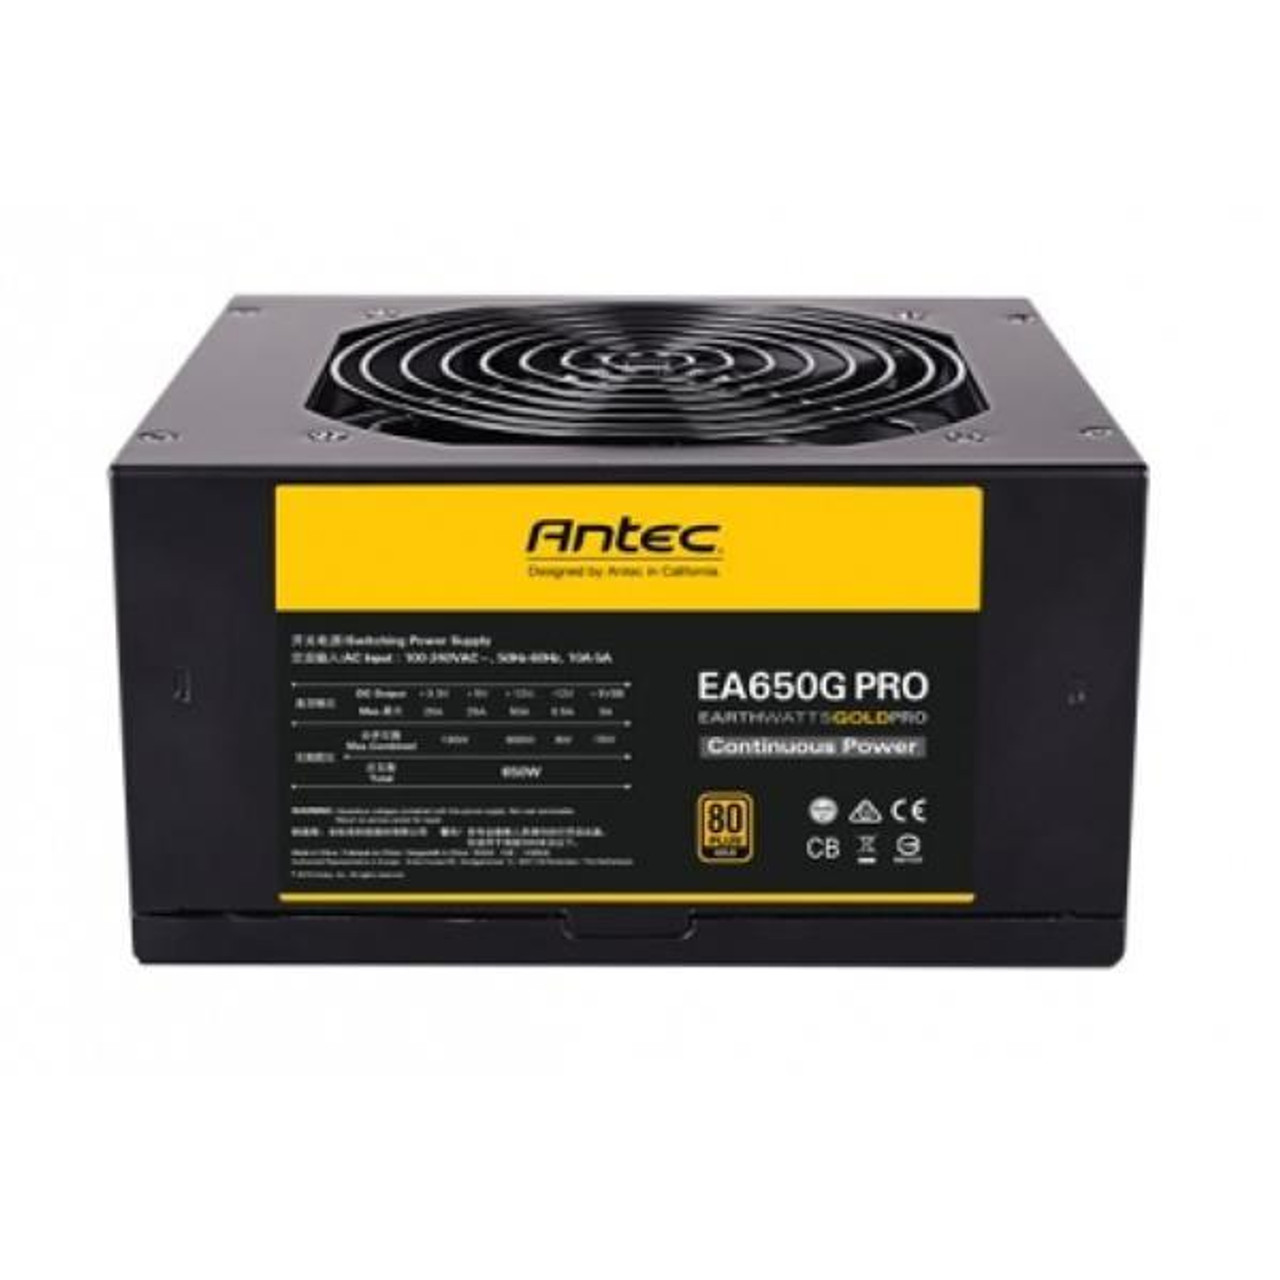 0-761345-11618-3 Antec EA650G PRO 650-Watts ATX12V 92% Efficiency 80 Plus Gold Power Supply